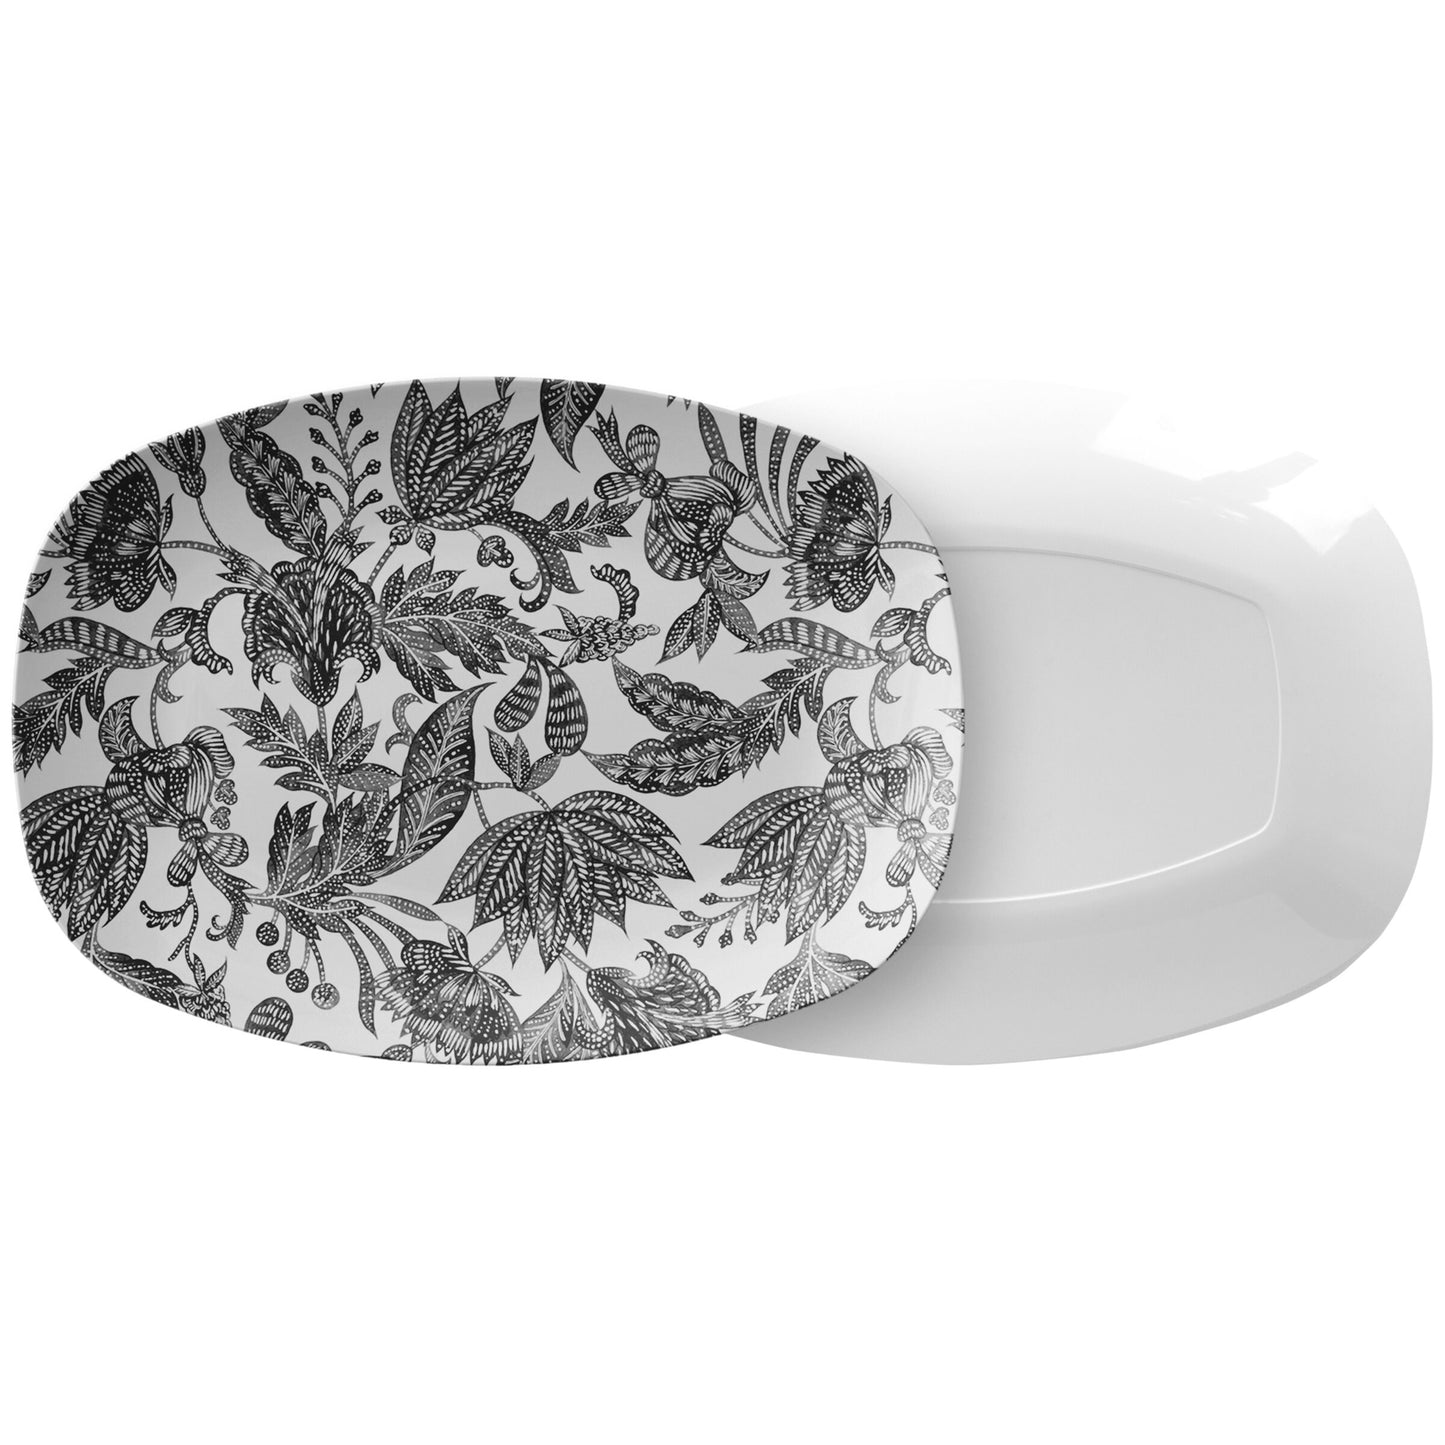 Floral Batik Serving Platter, Black and White, Luxury Thermosaf Plastic